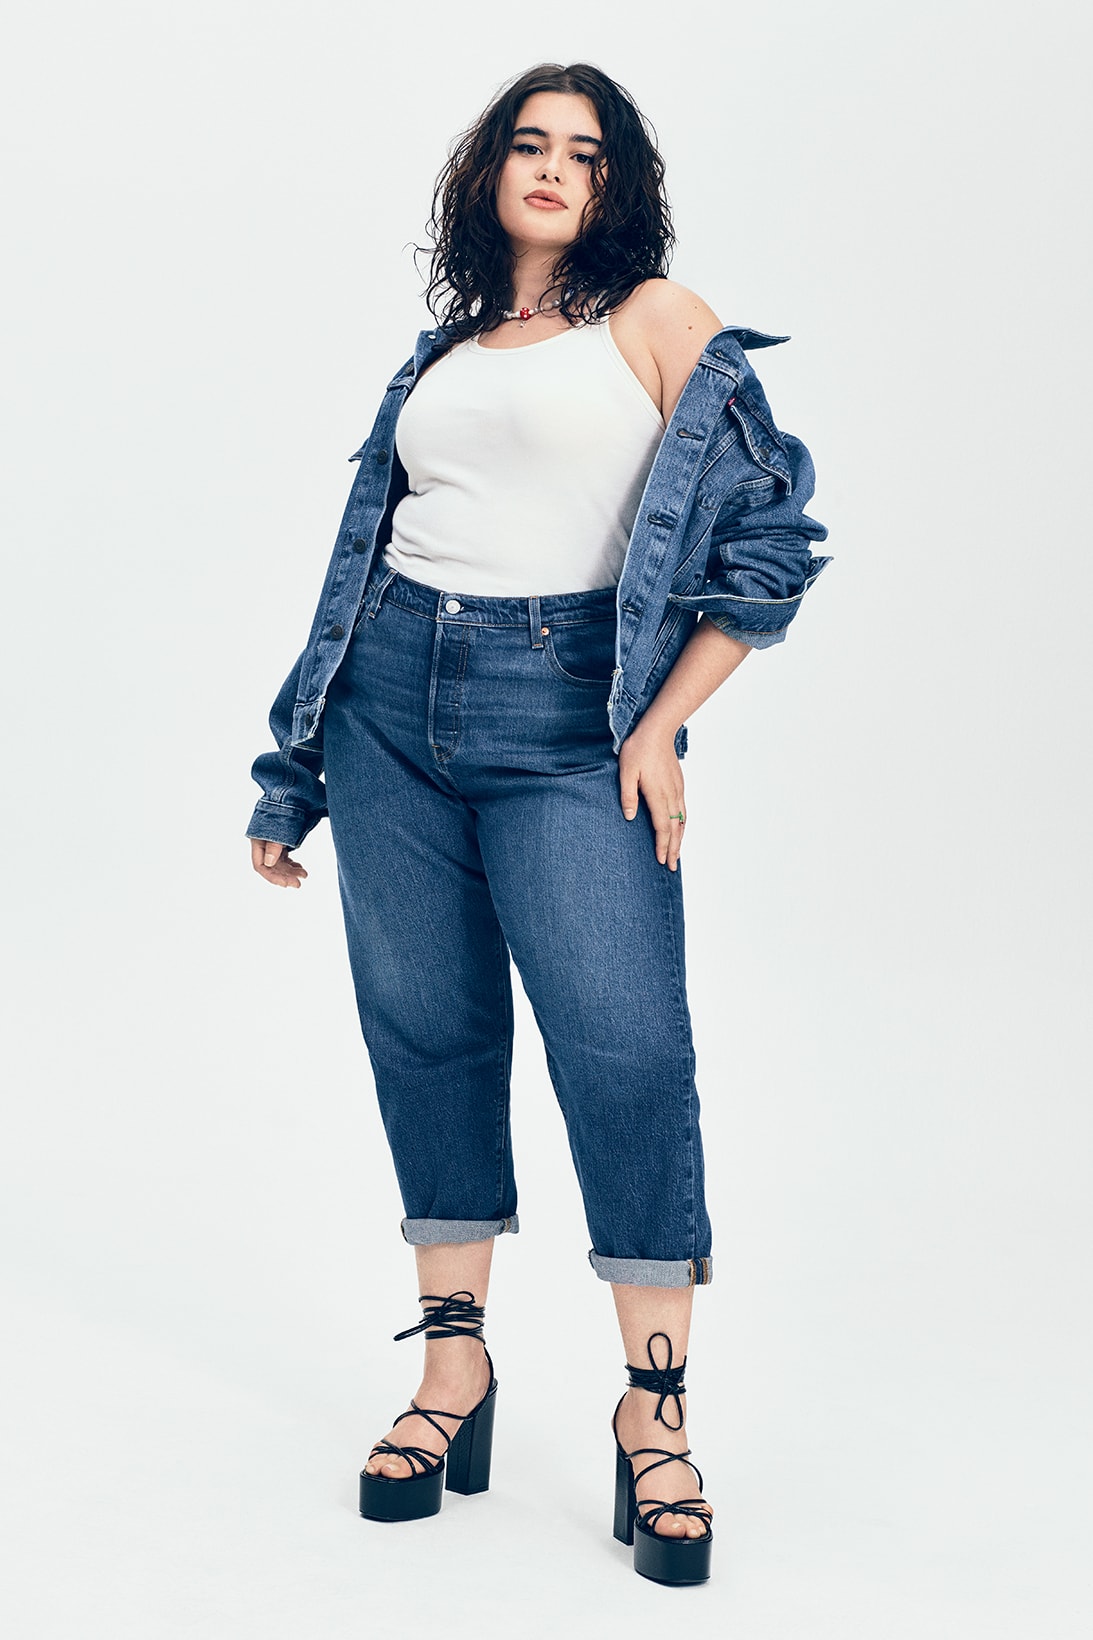 Levi's 501 Originals Jeans Campaign Barbie Ferreira Tank Top Jacket Heels